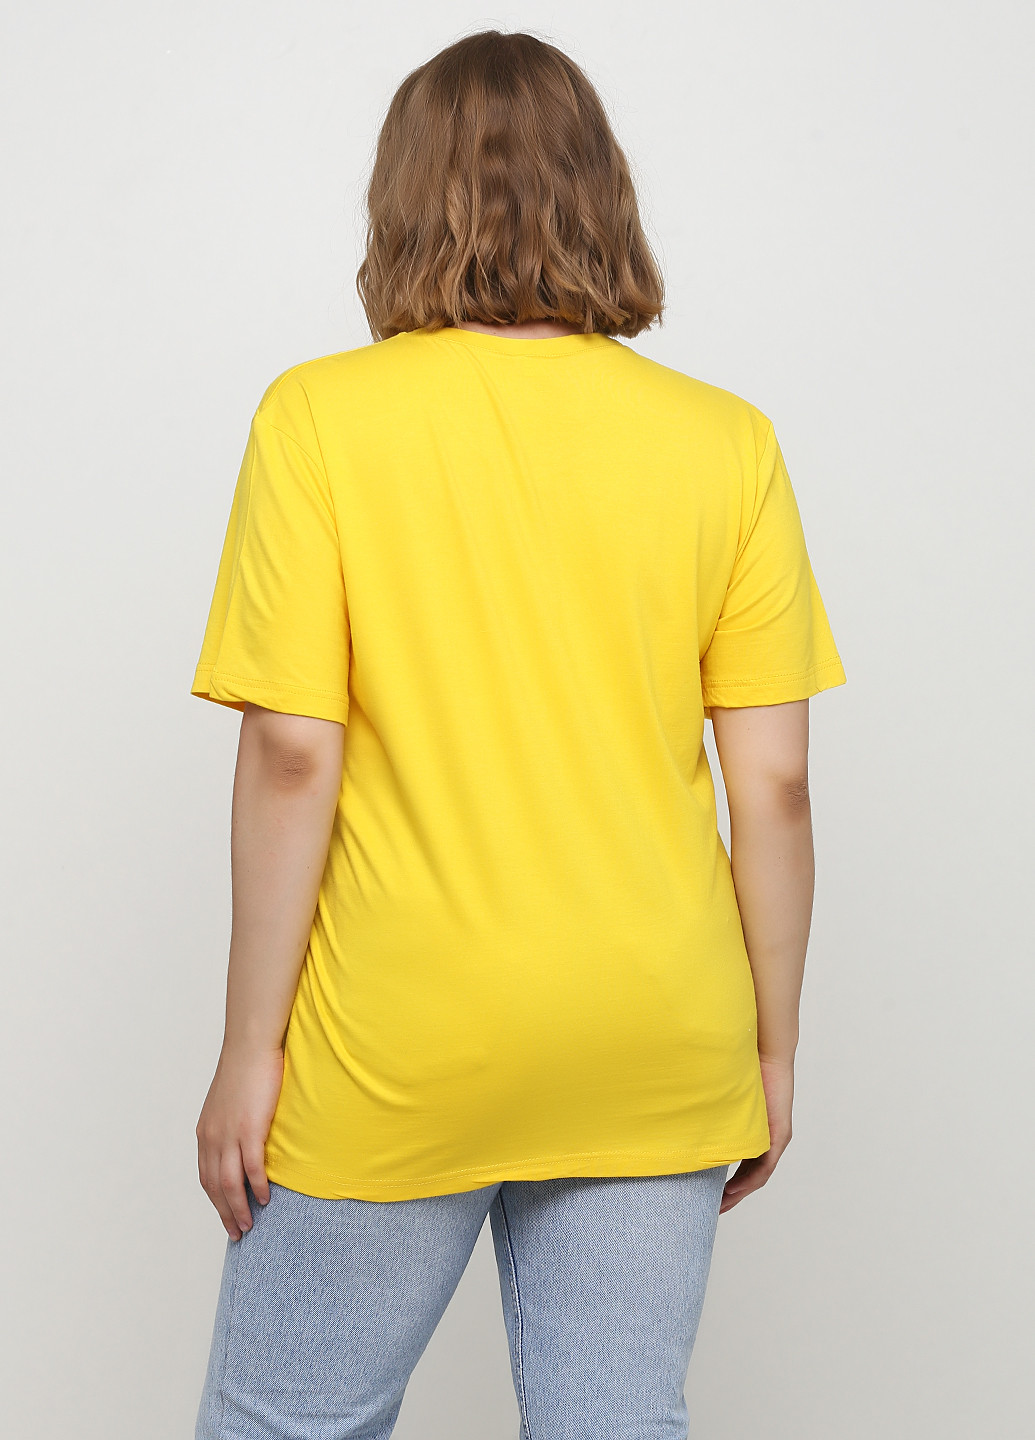 Желтая летняя футболка Wild Love